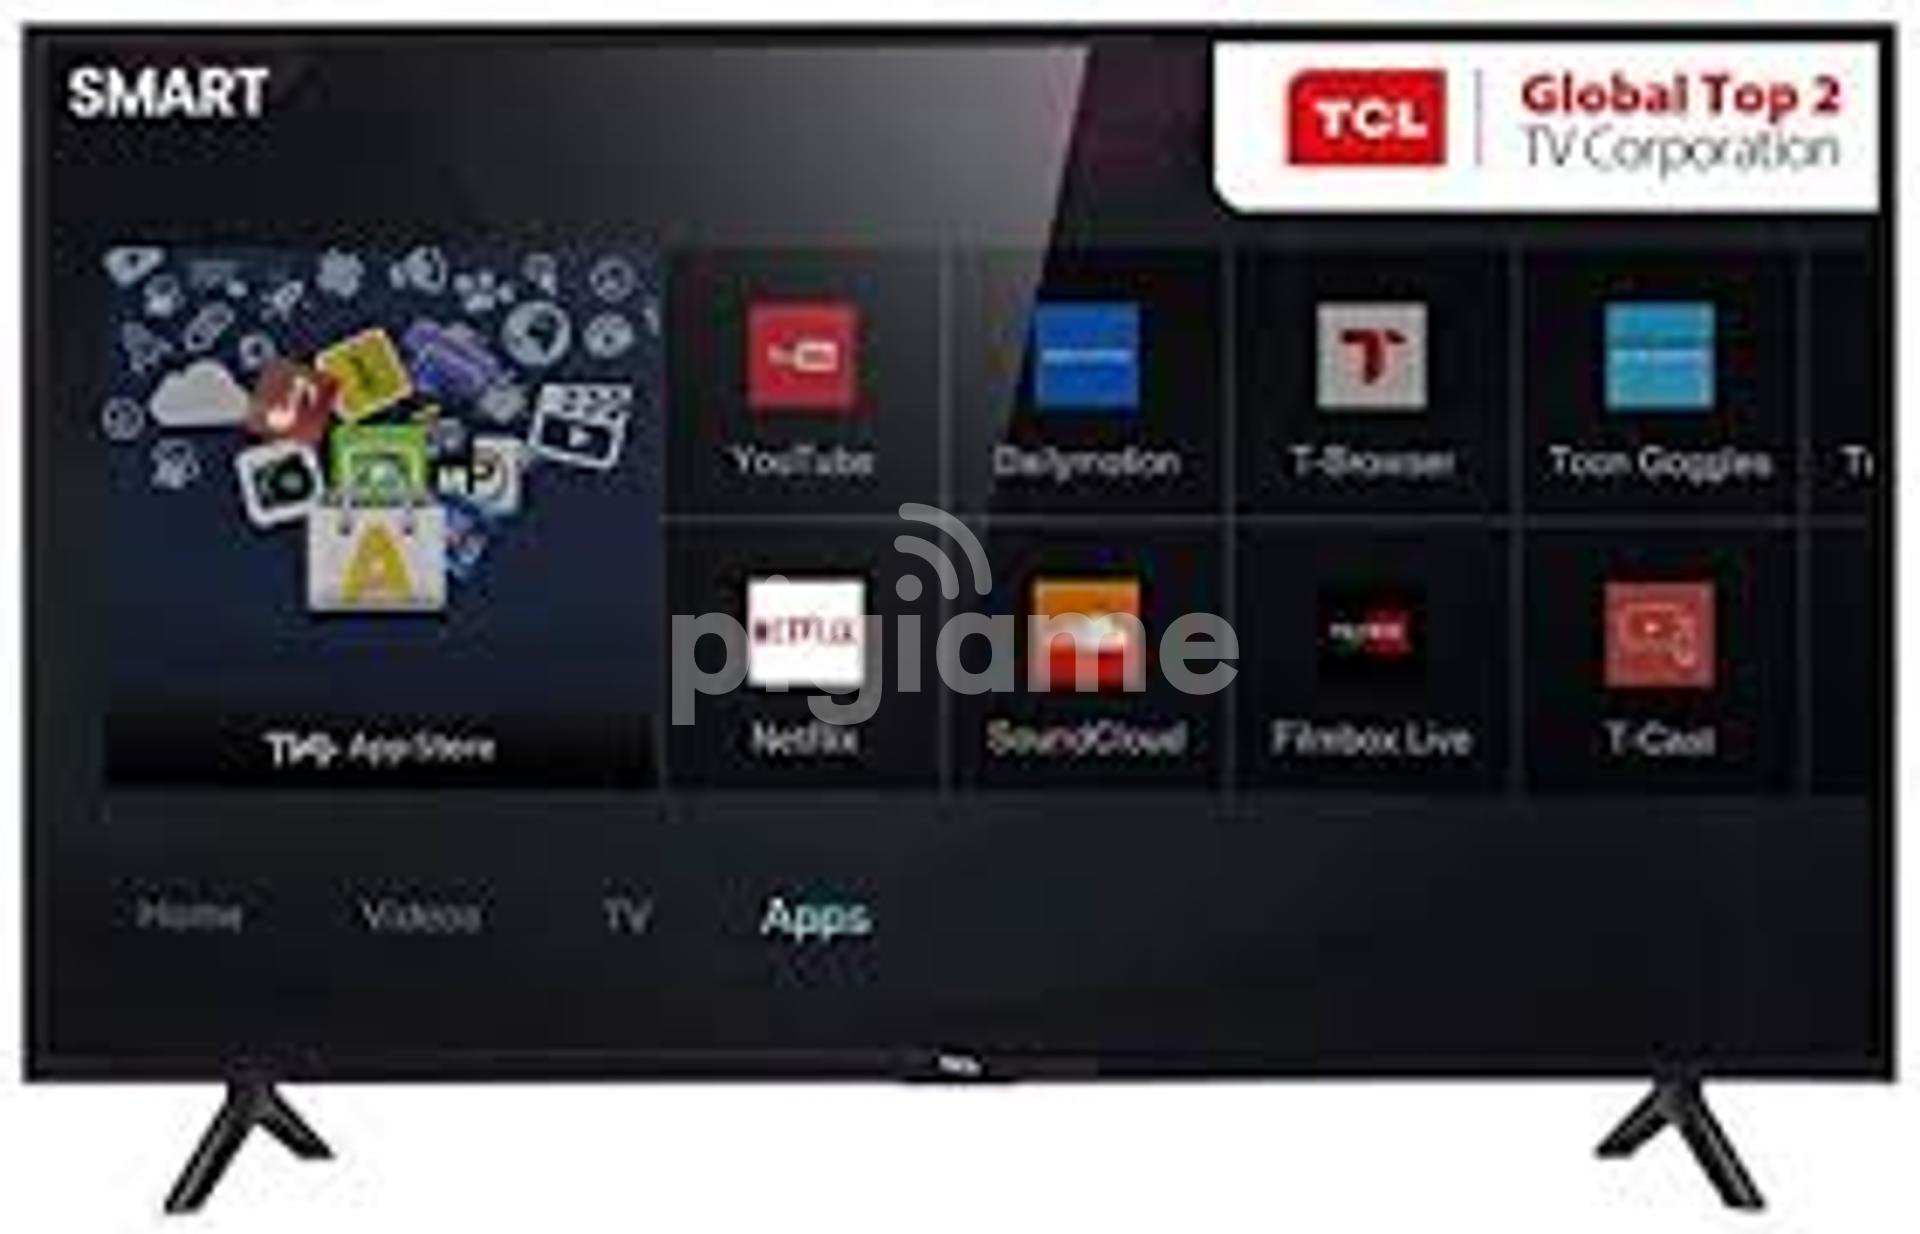 Днс телевизоры андроид. TCL TV s6500. TCL Smart TV. TCL Android TV 32s6500. Телевизор смарт ТСЛ.